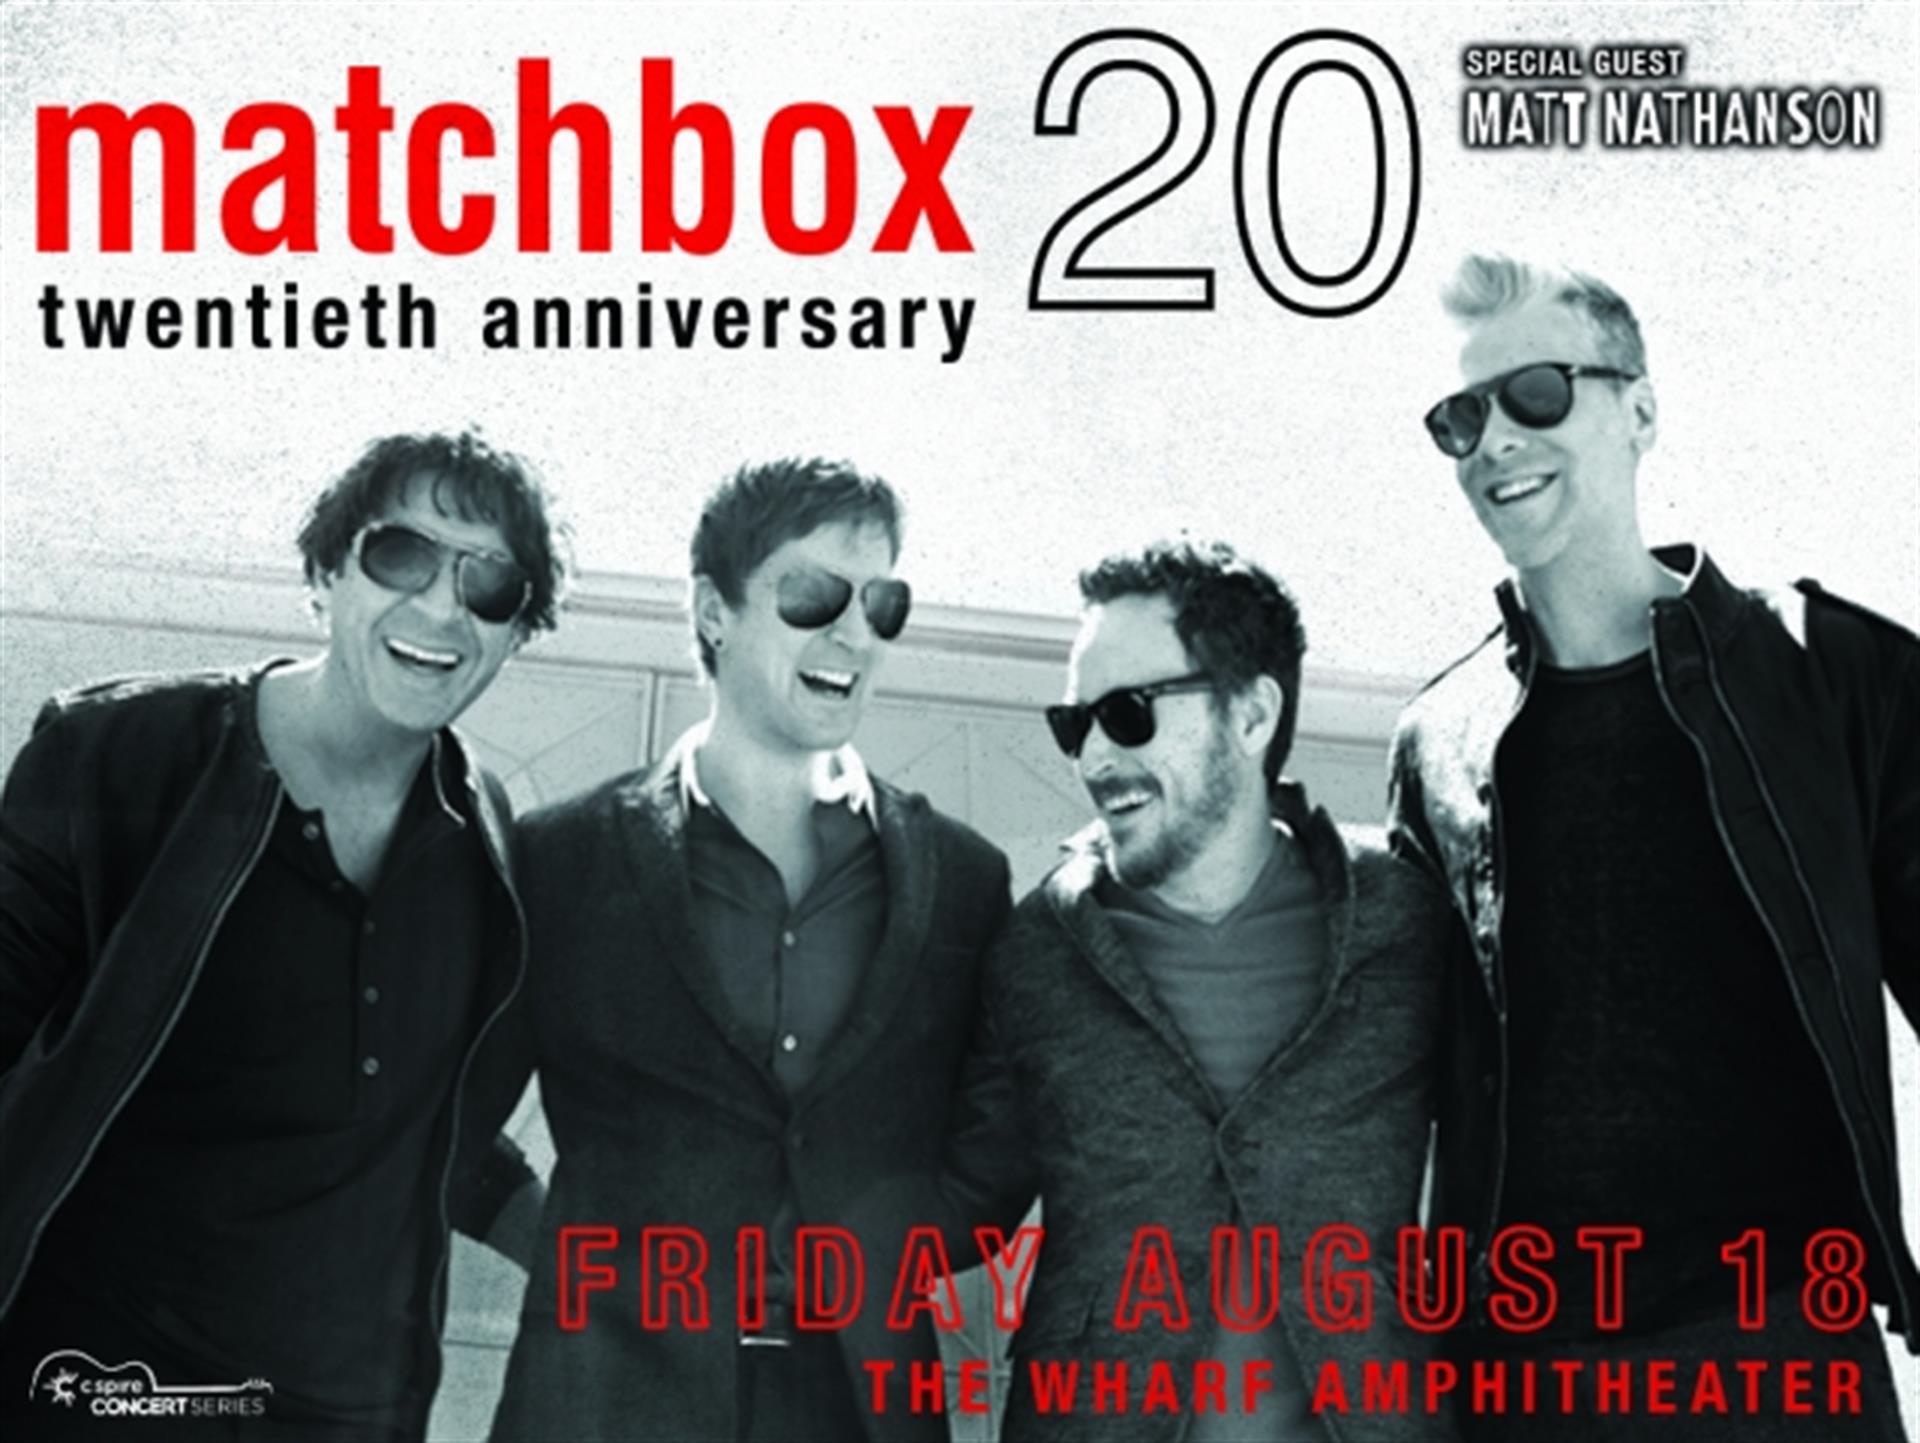 Matchbox Twenty in Concert at the Wharf!